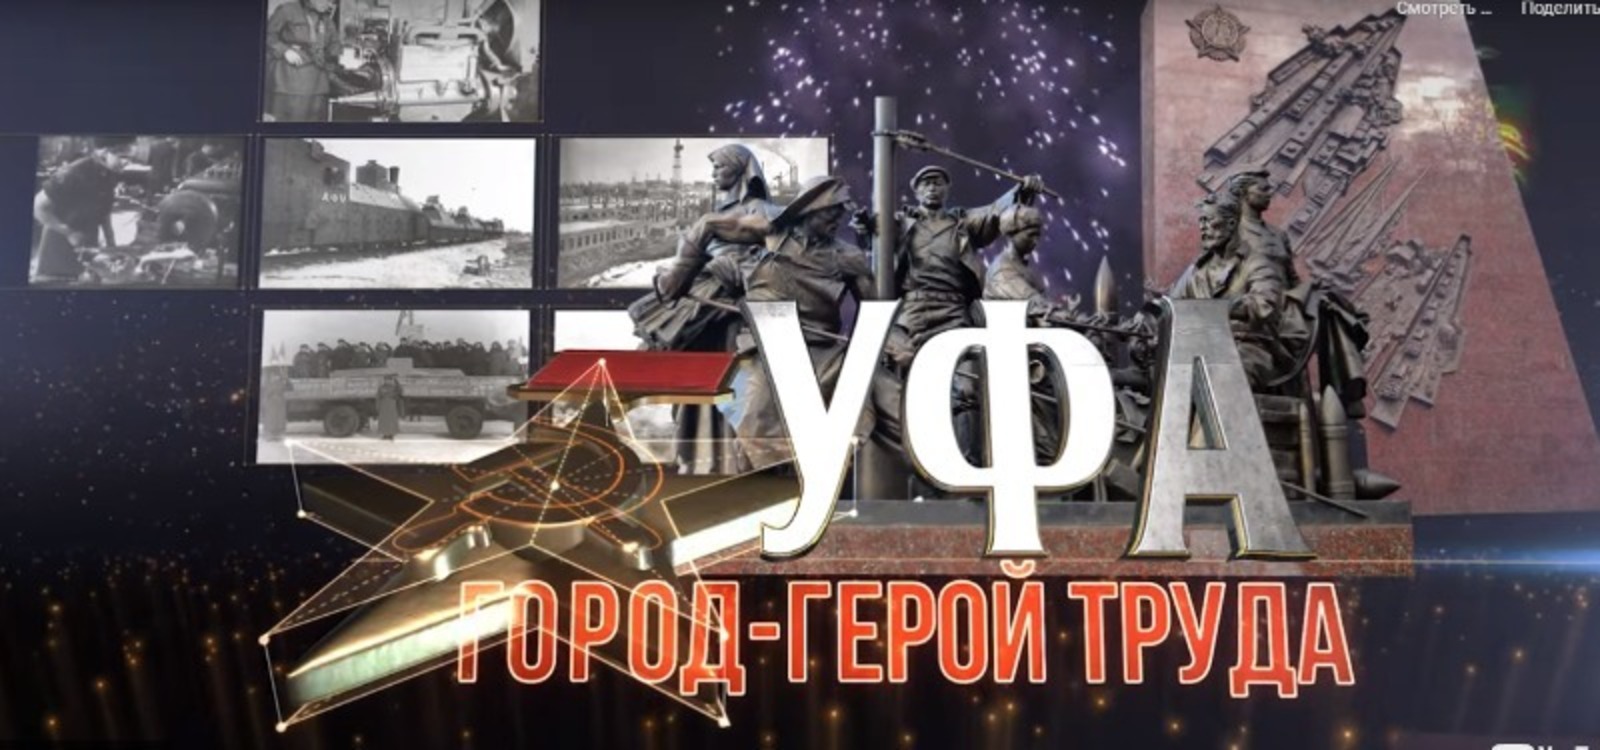 Завтра на БСТ покажут фильм «Уфа – город-герой труда»